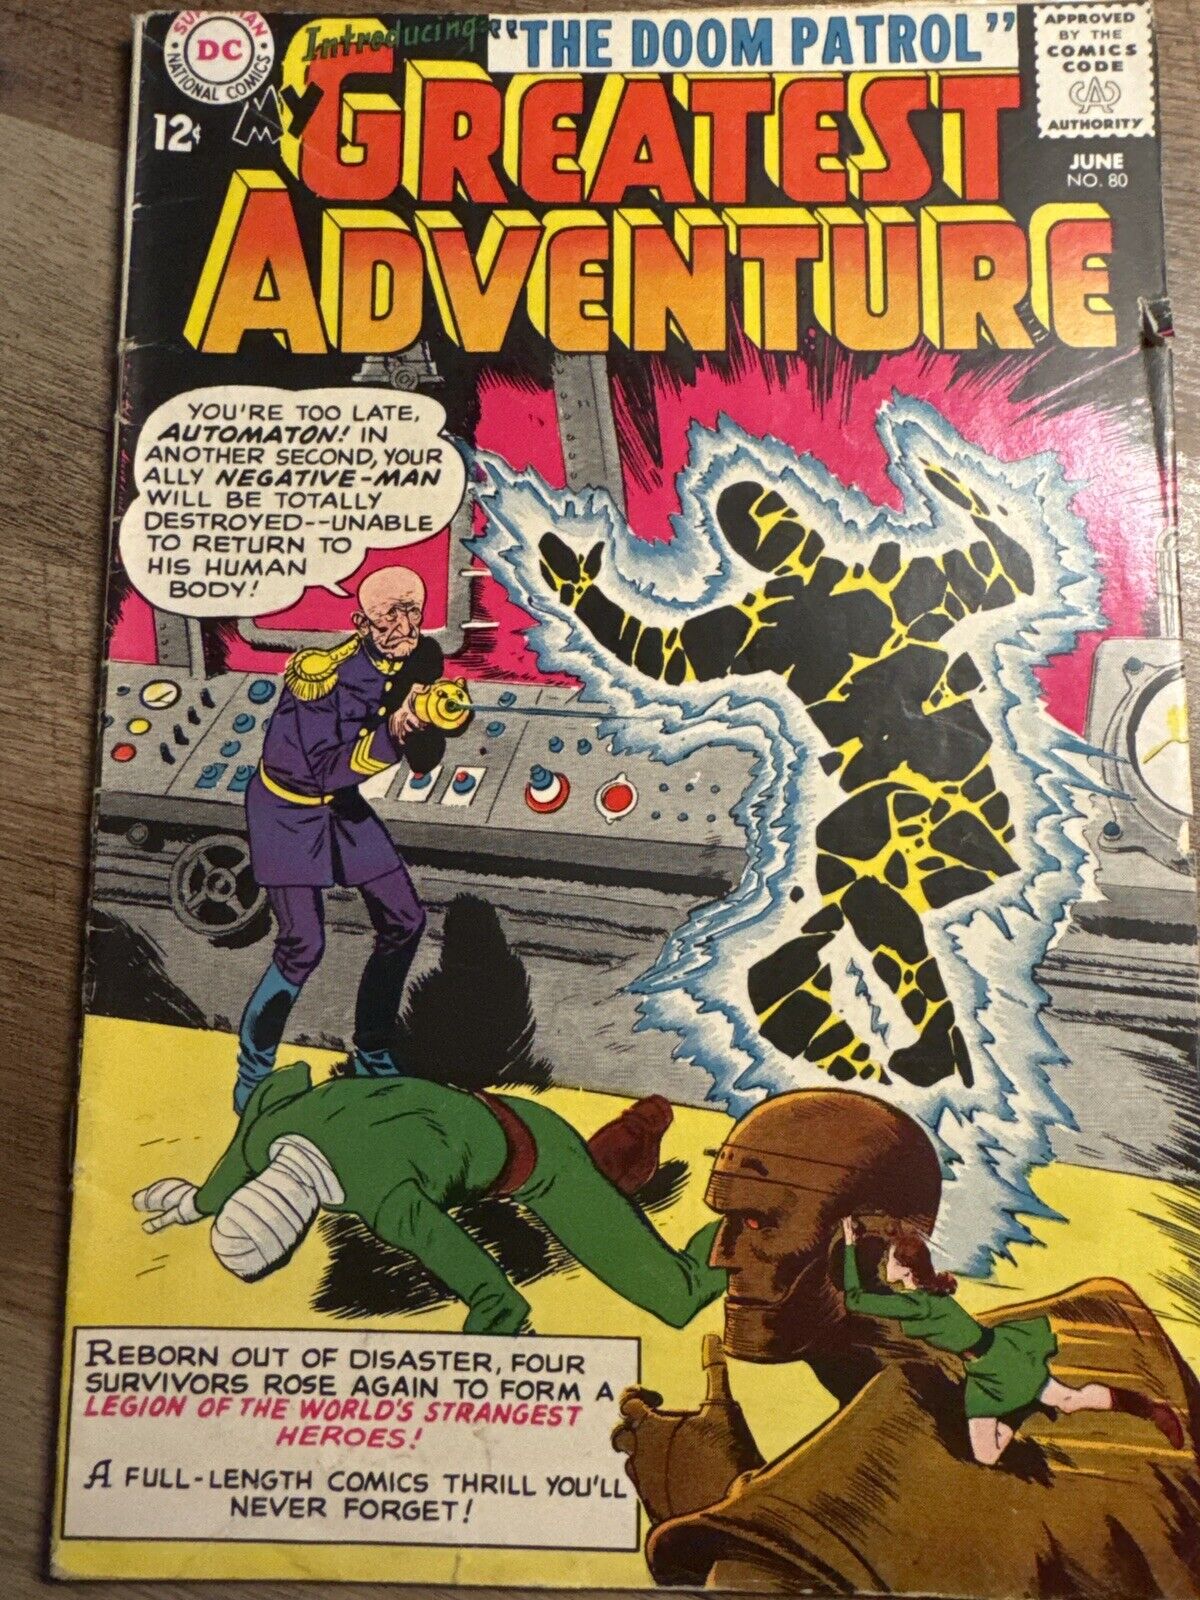 My Greatest Adventure #80 1963 Origin & 1st App of The Doom Patrol 3.5 Not CGC